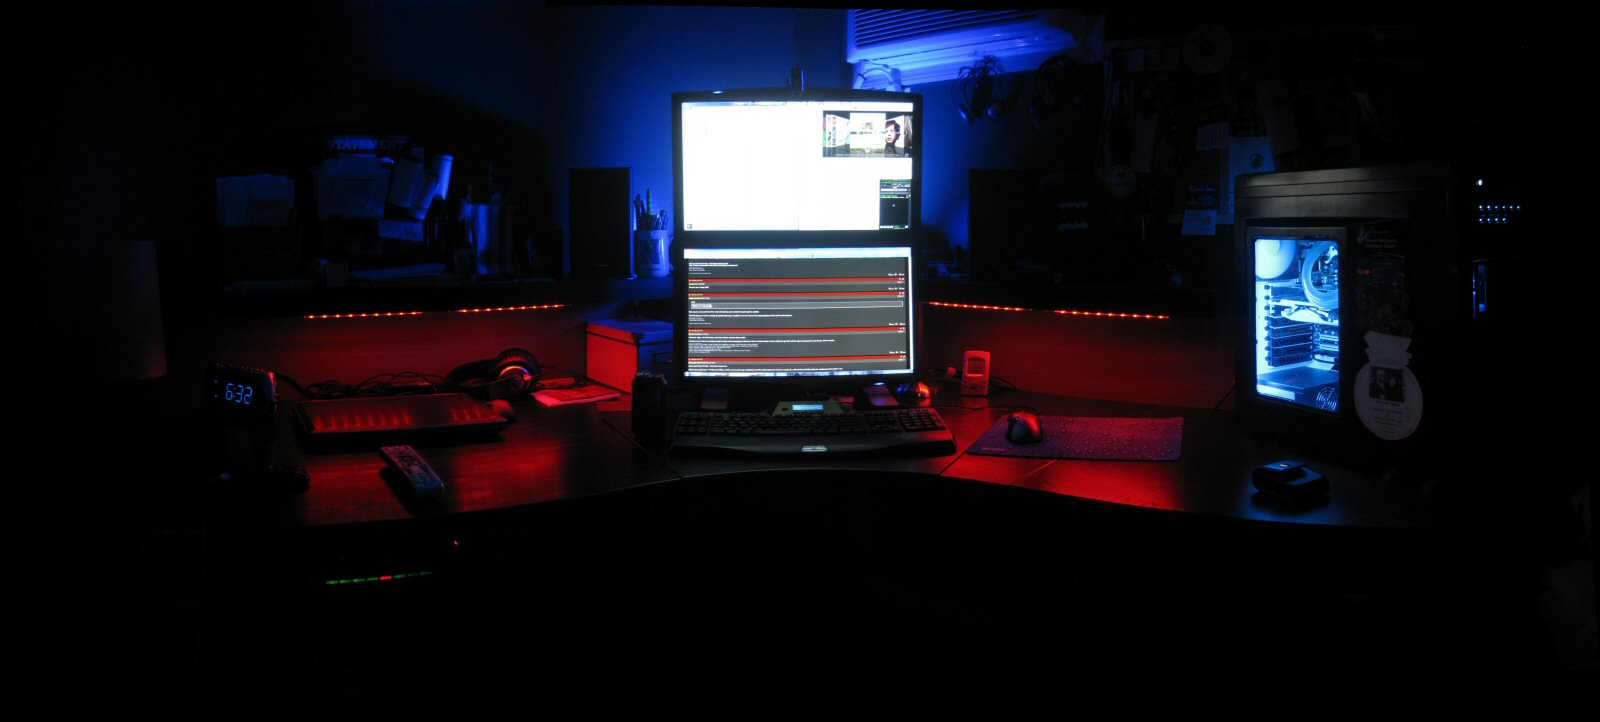 new_desk_blue_red_02-02-2012sm.jpg